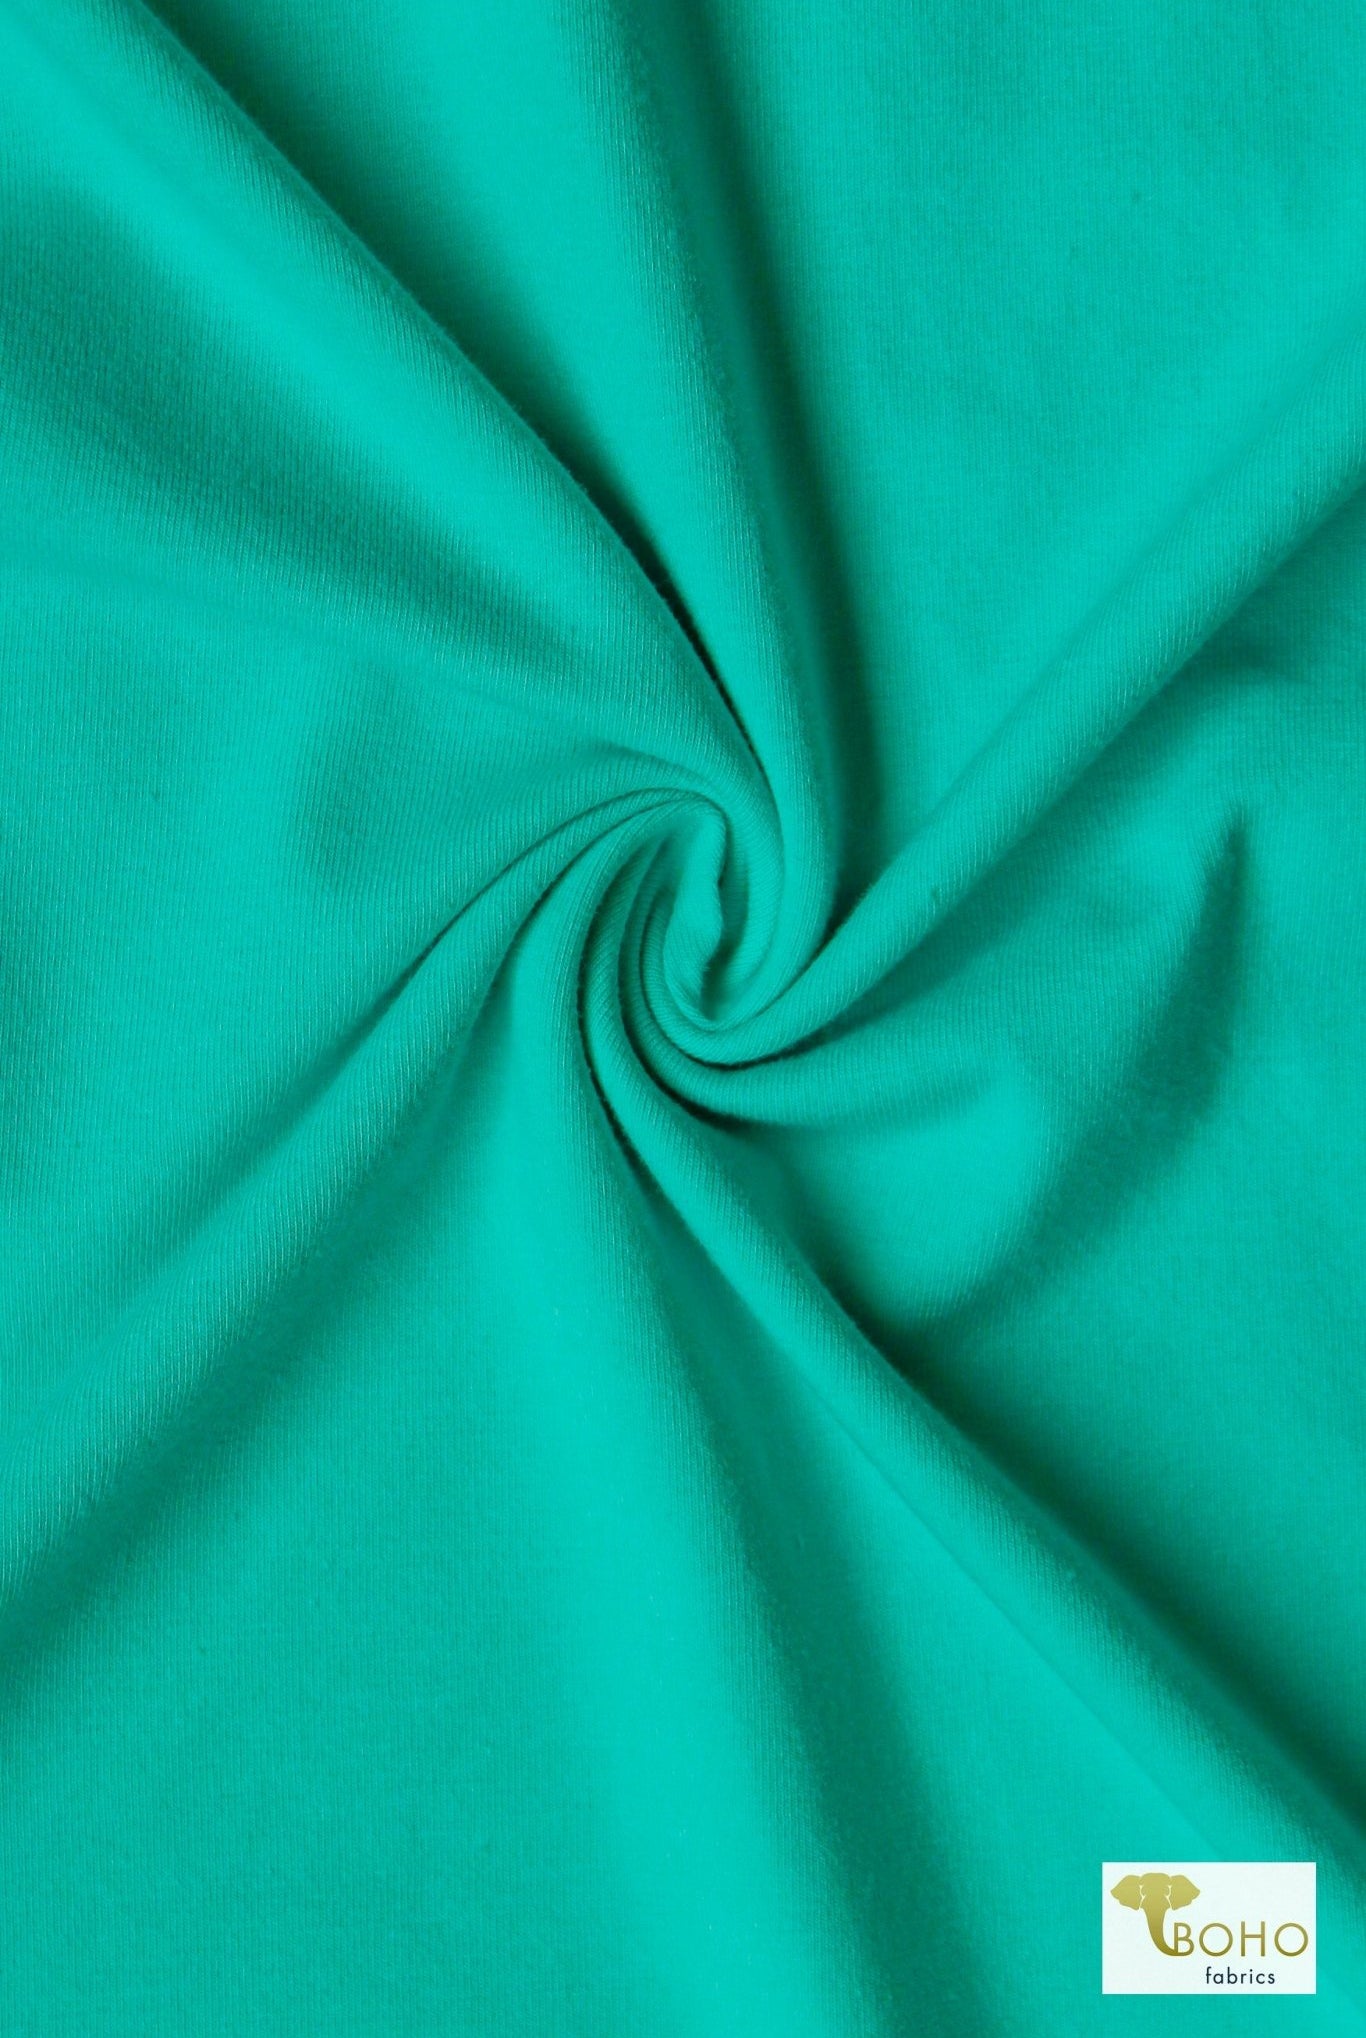 Aqua, Solid Cotton Spandex Knit Fabric, 9 oz. - Boho Fabrics